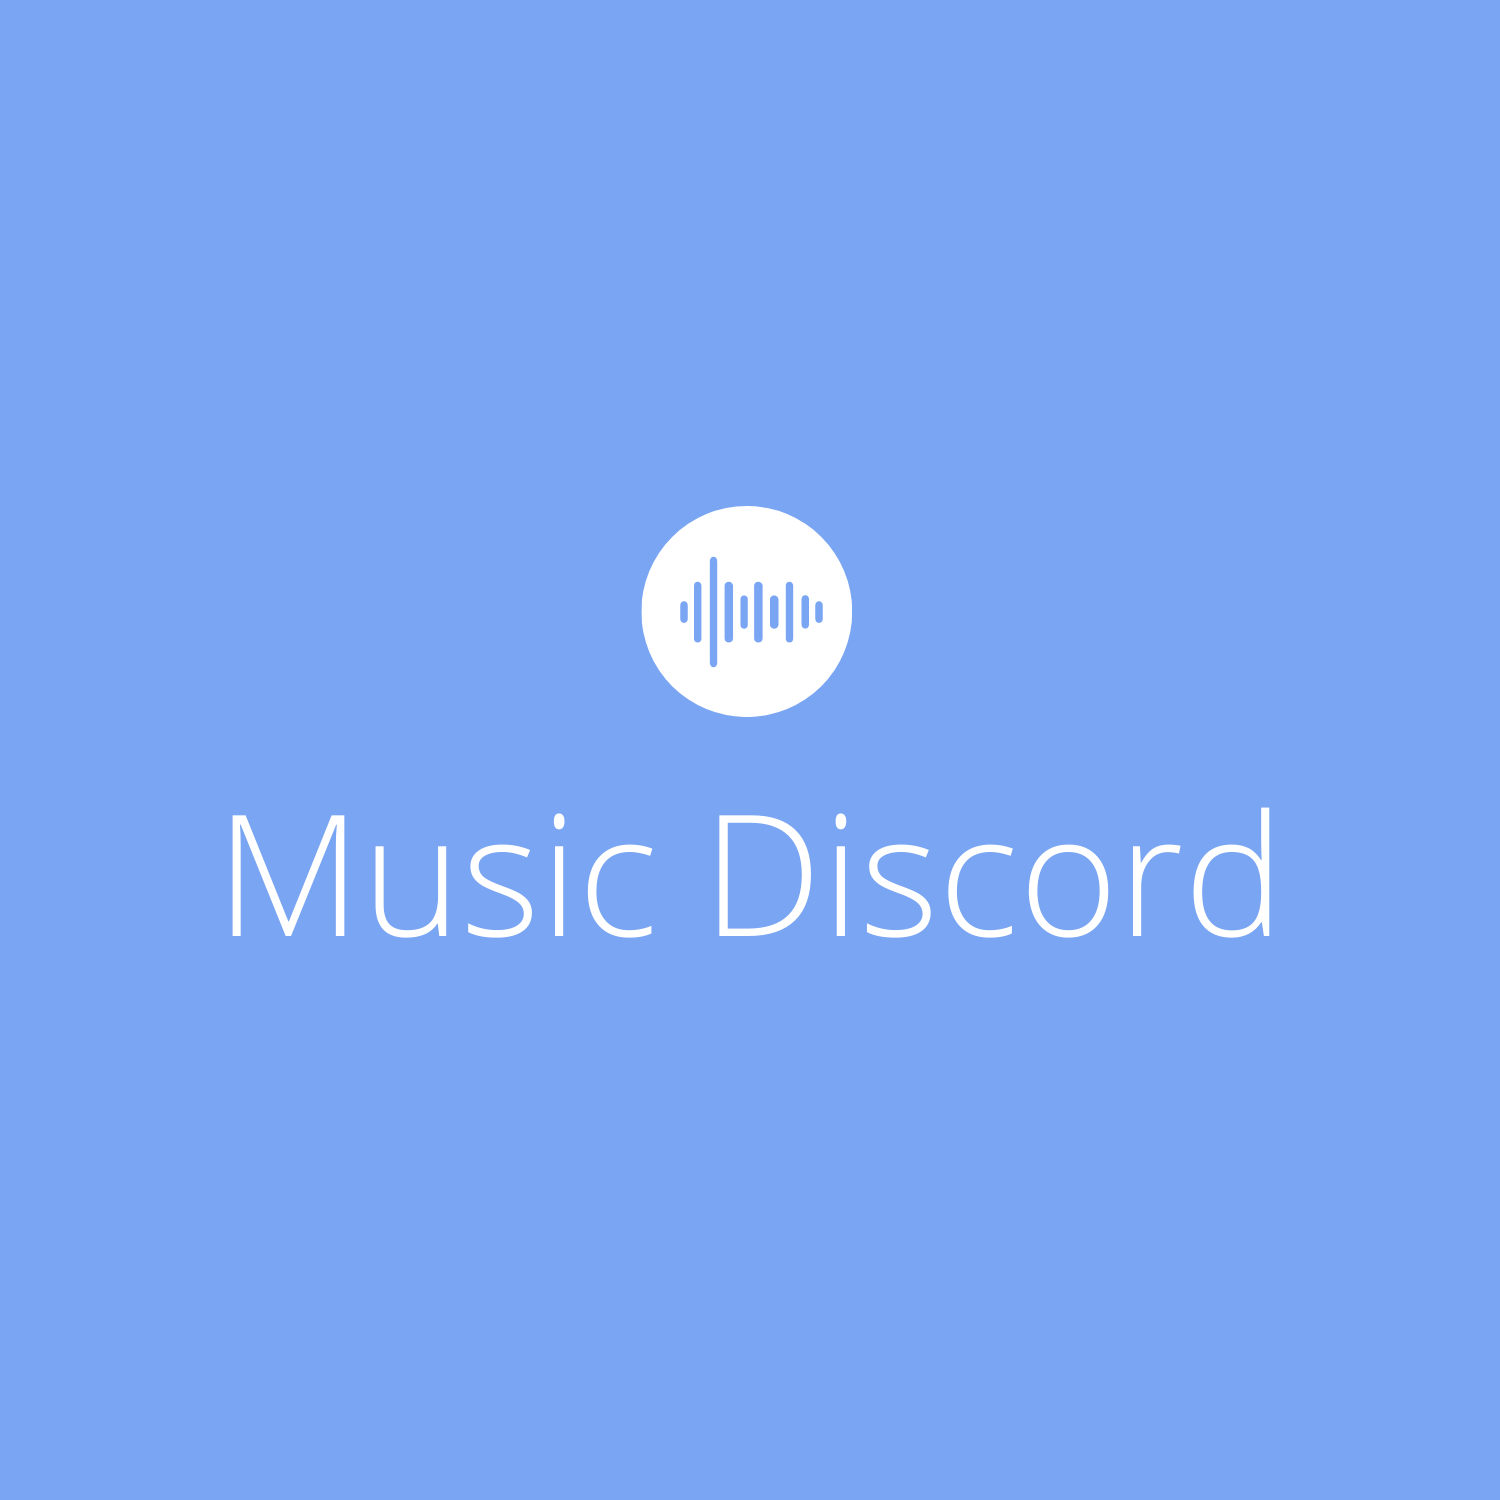 Jockie music дискорд. Discord Music. Музыка Дискорд. Music bot discord. Music logo discord.